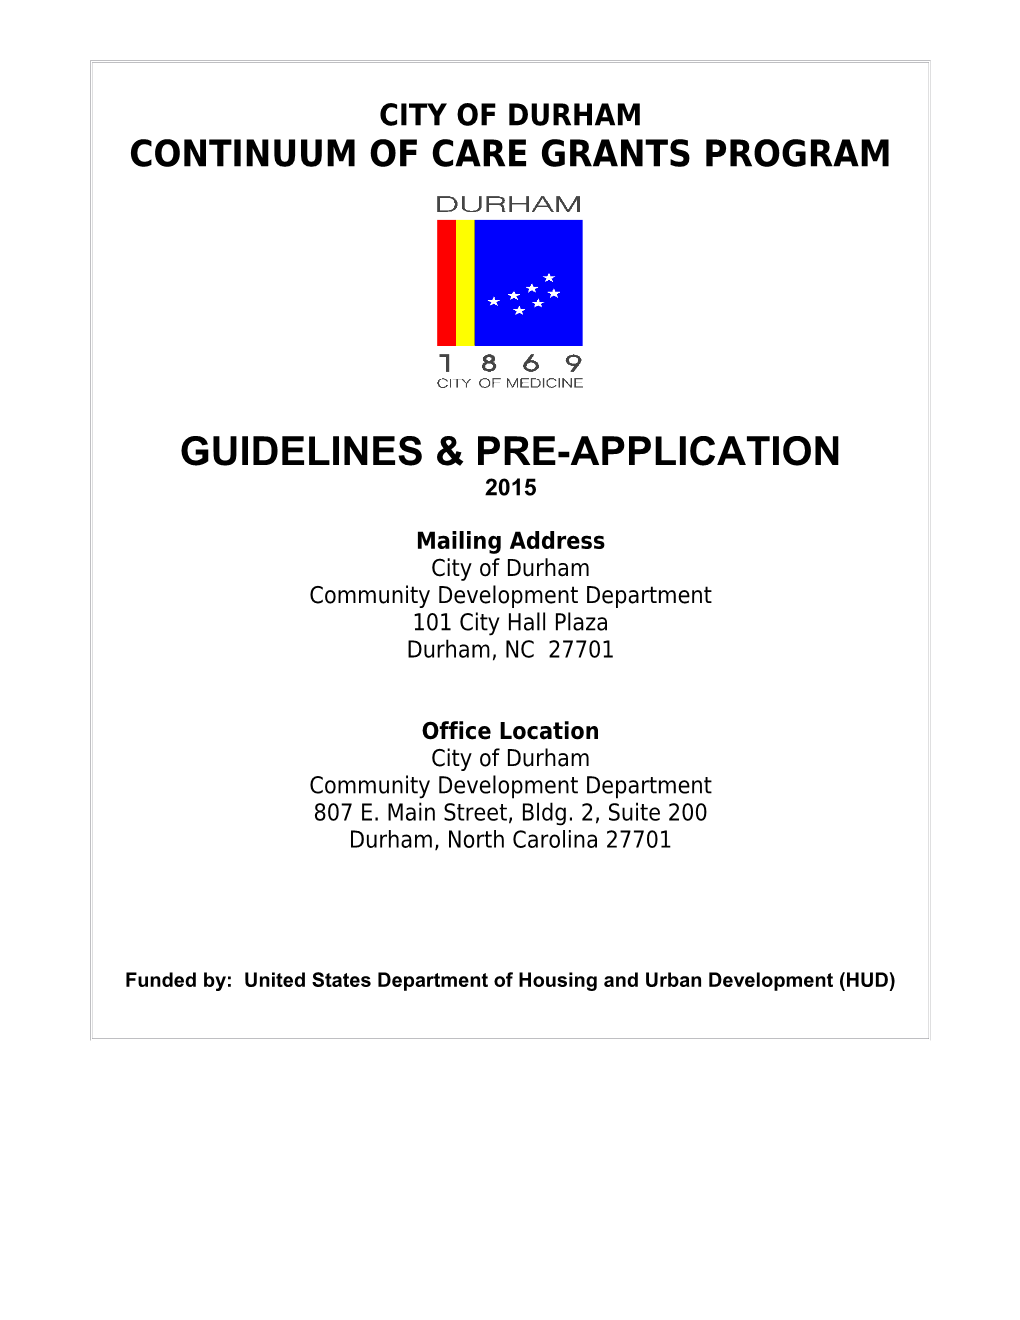 City of Durham, Continuum of Care Grant Funding Application 2015